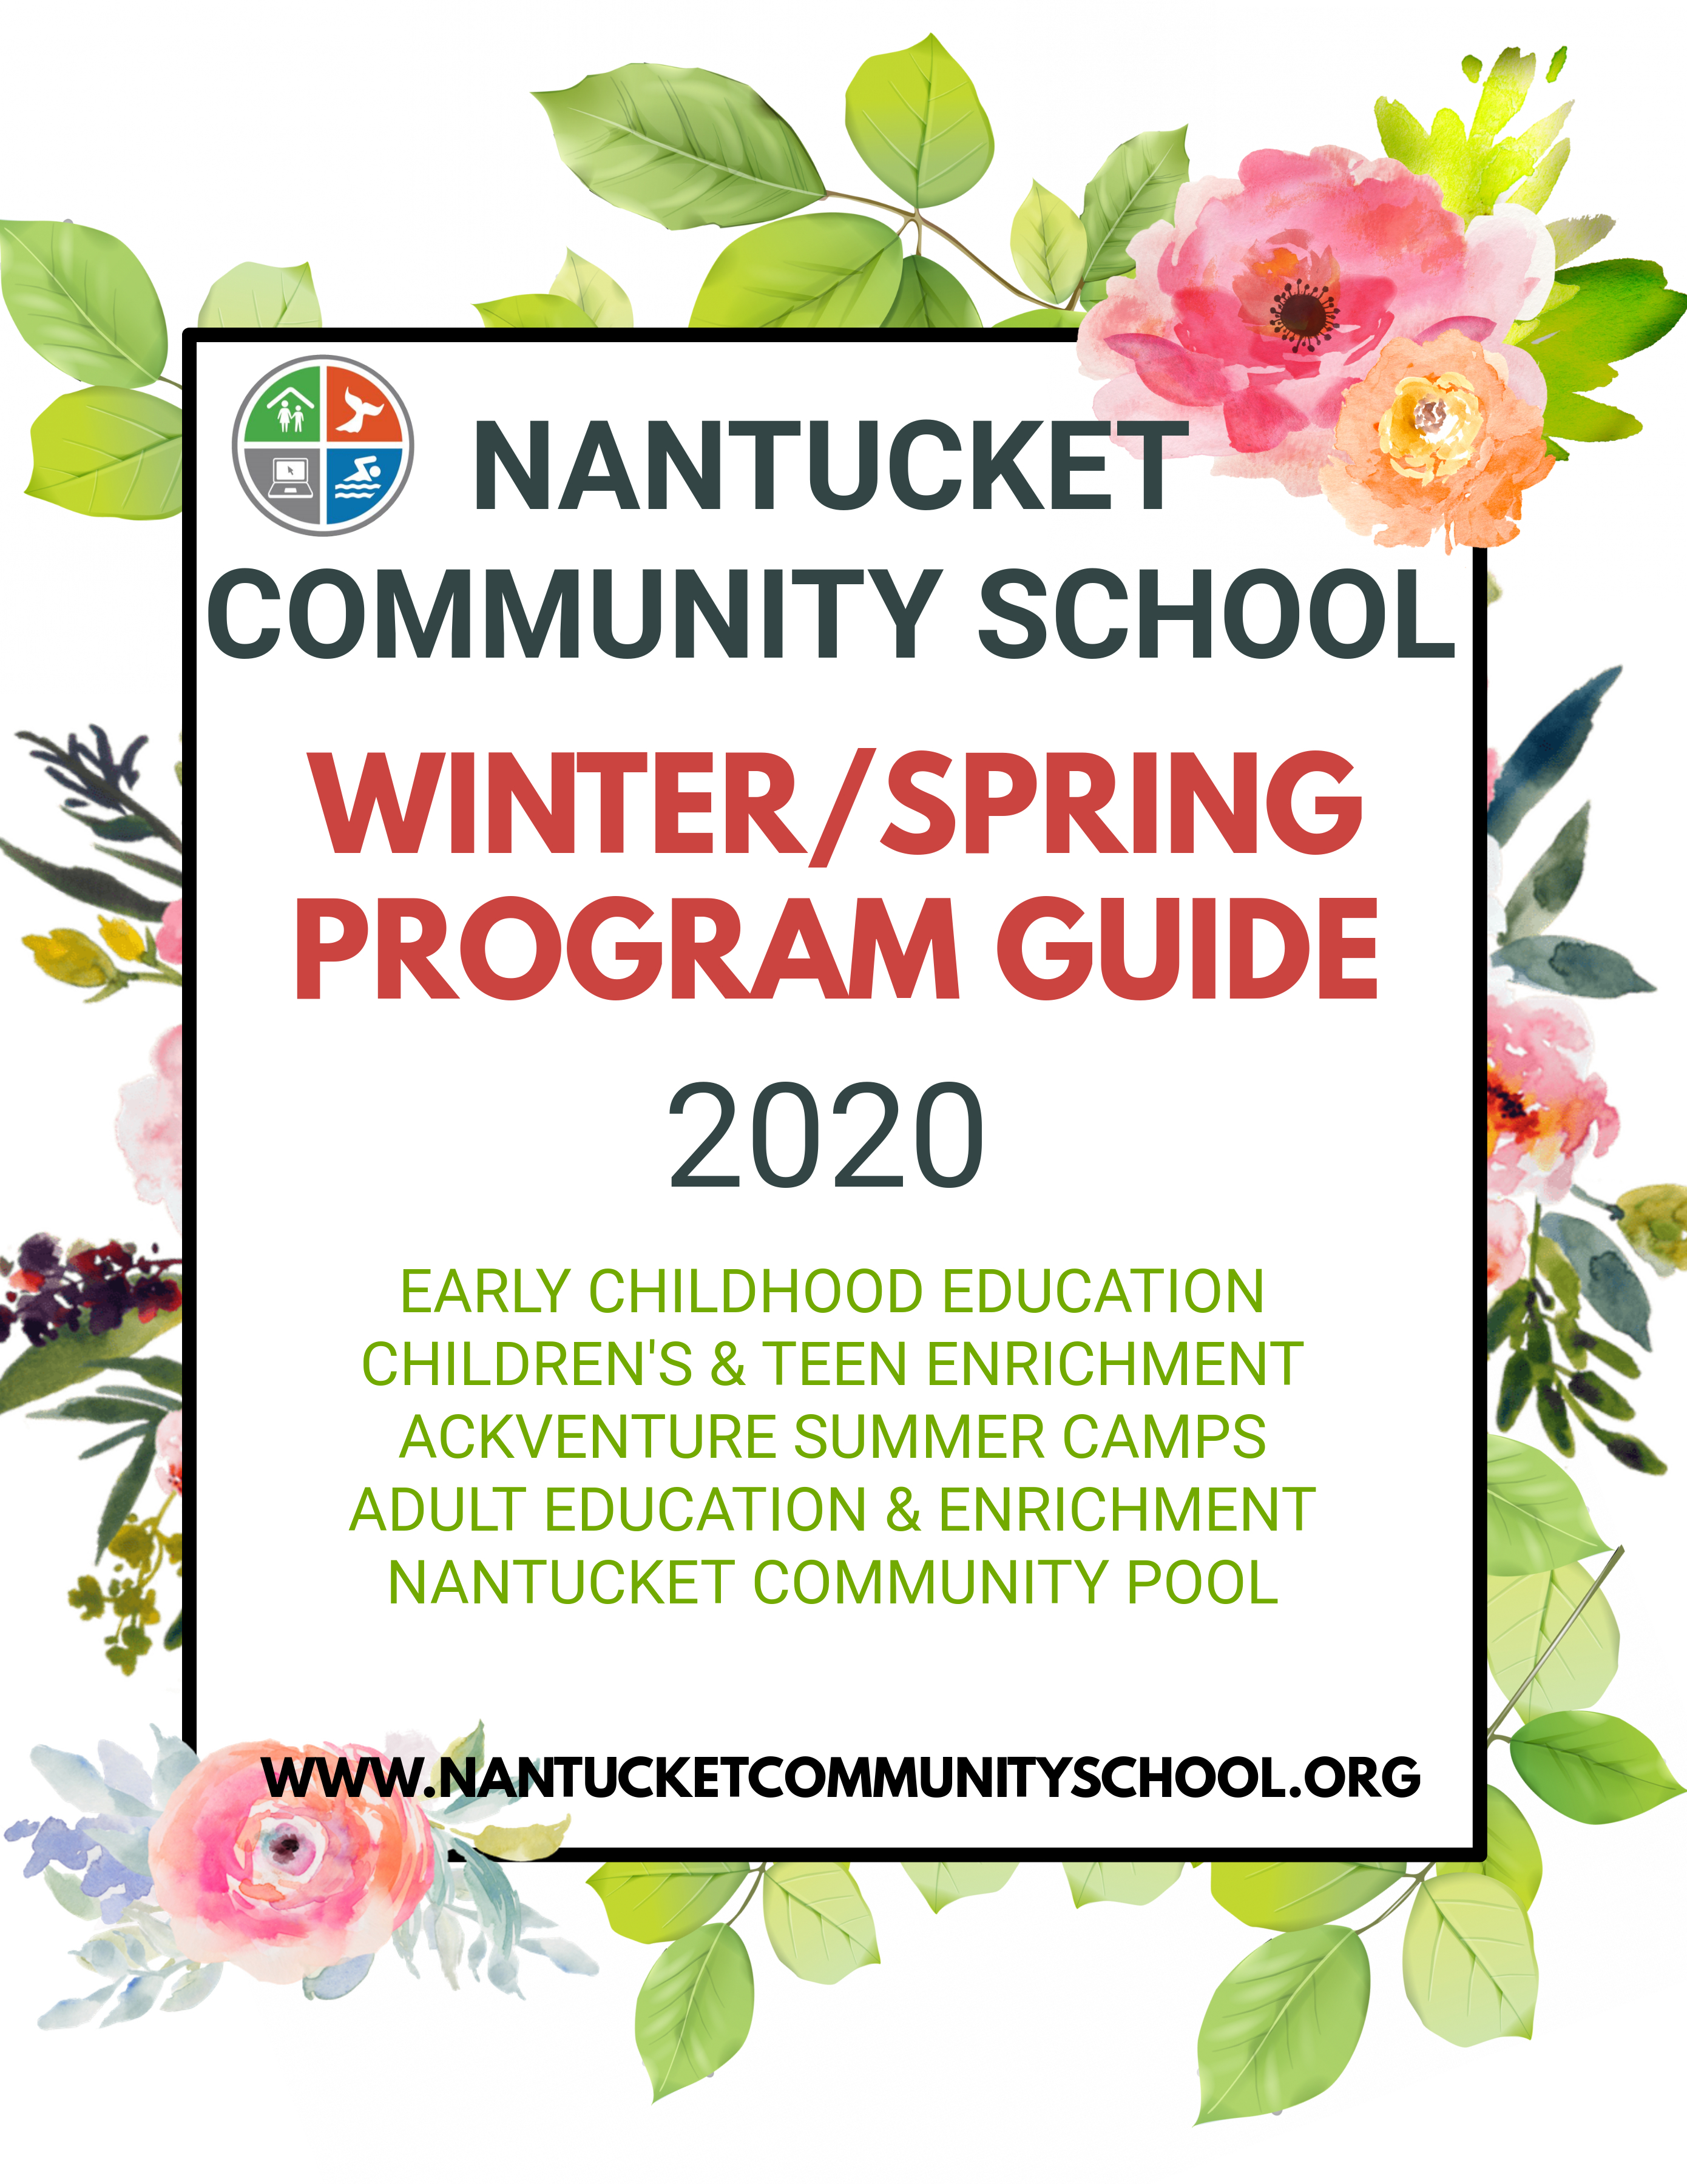 Nantucket Community School The Nantucket Community School was founded